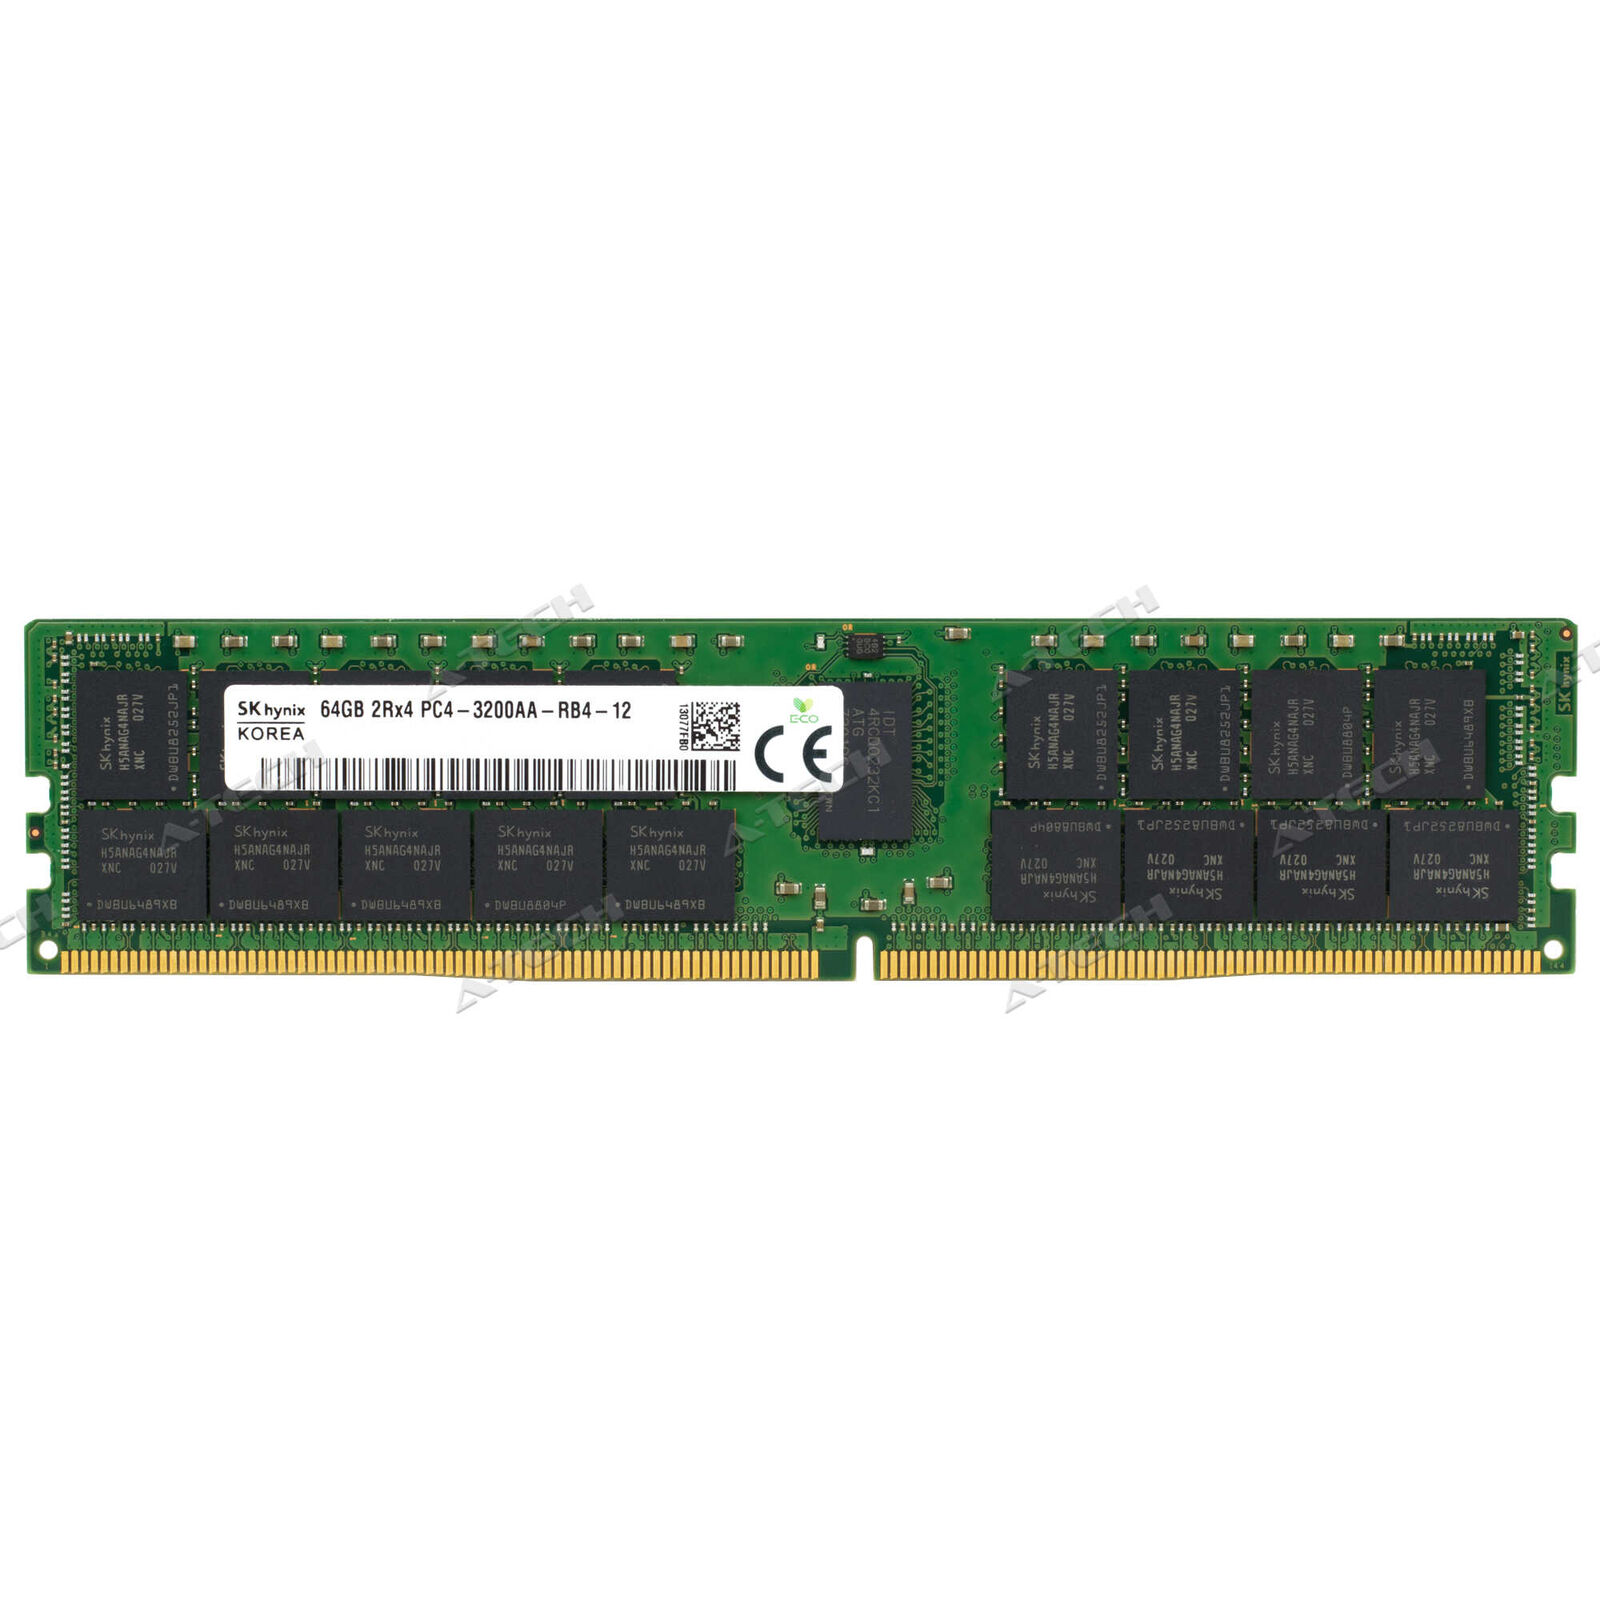 Samsung 64GB 2Rx4 PC4-3200 RDIMM DDR4-25600 ECC REG Registered Server Memory RAM